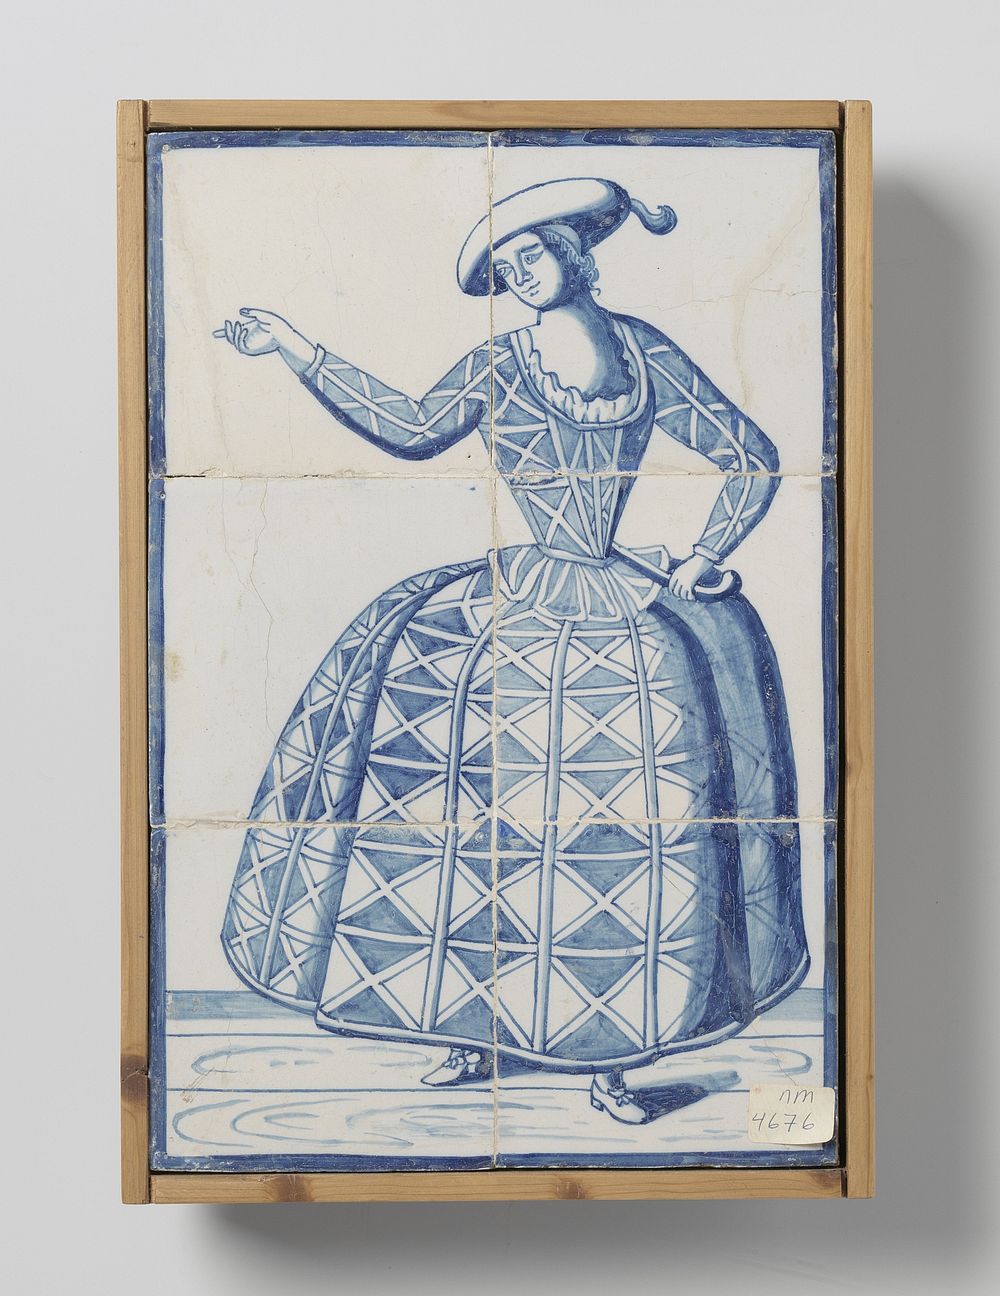 Tegeltableau van zes tegels (1720 - 1760) by anonymous